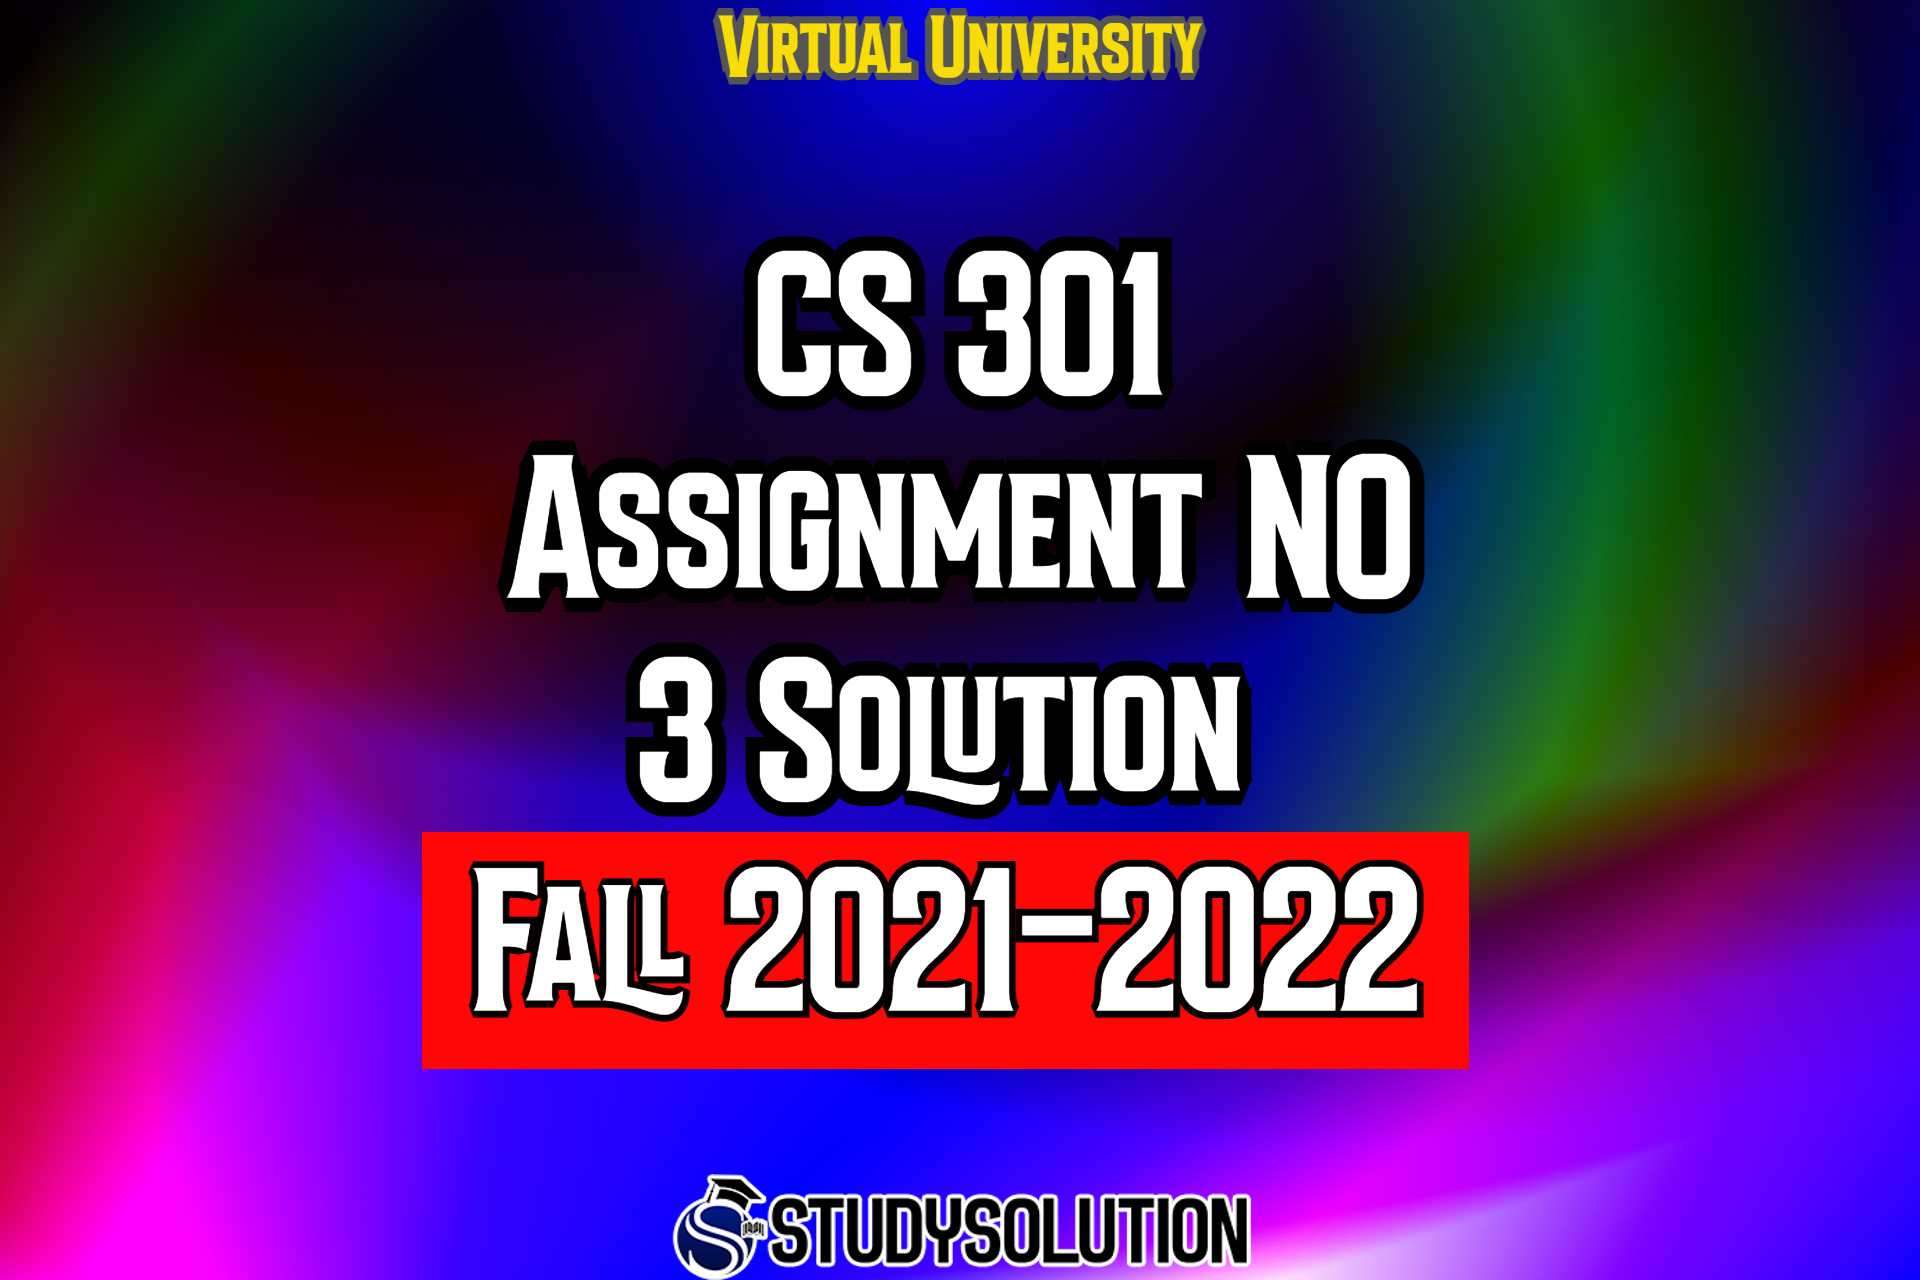 CS301 Assignment No 3 Solution Fall 2022